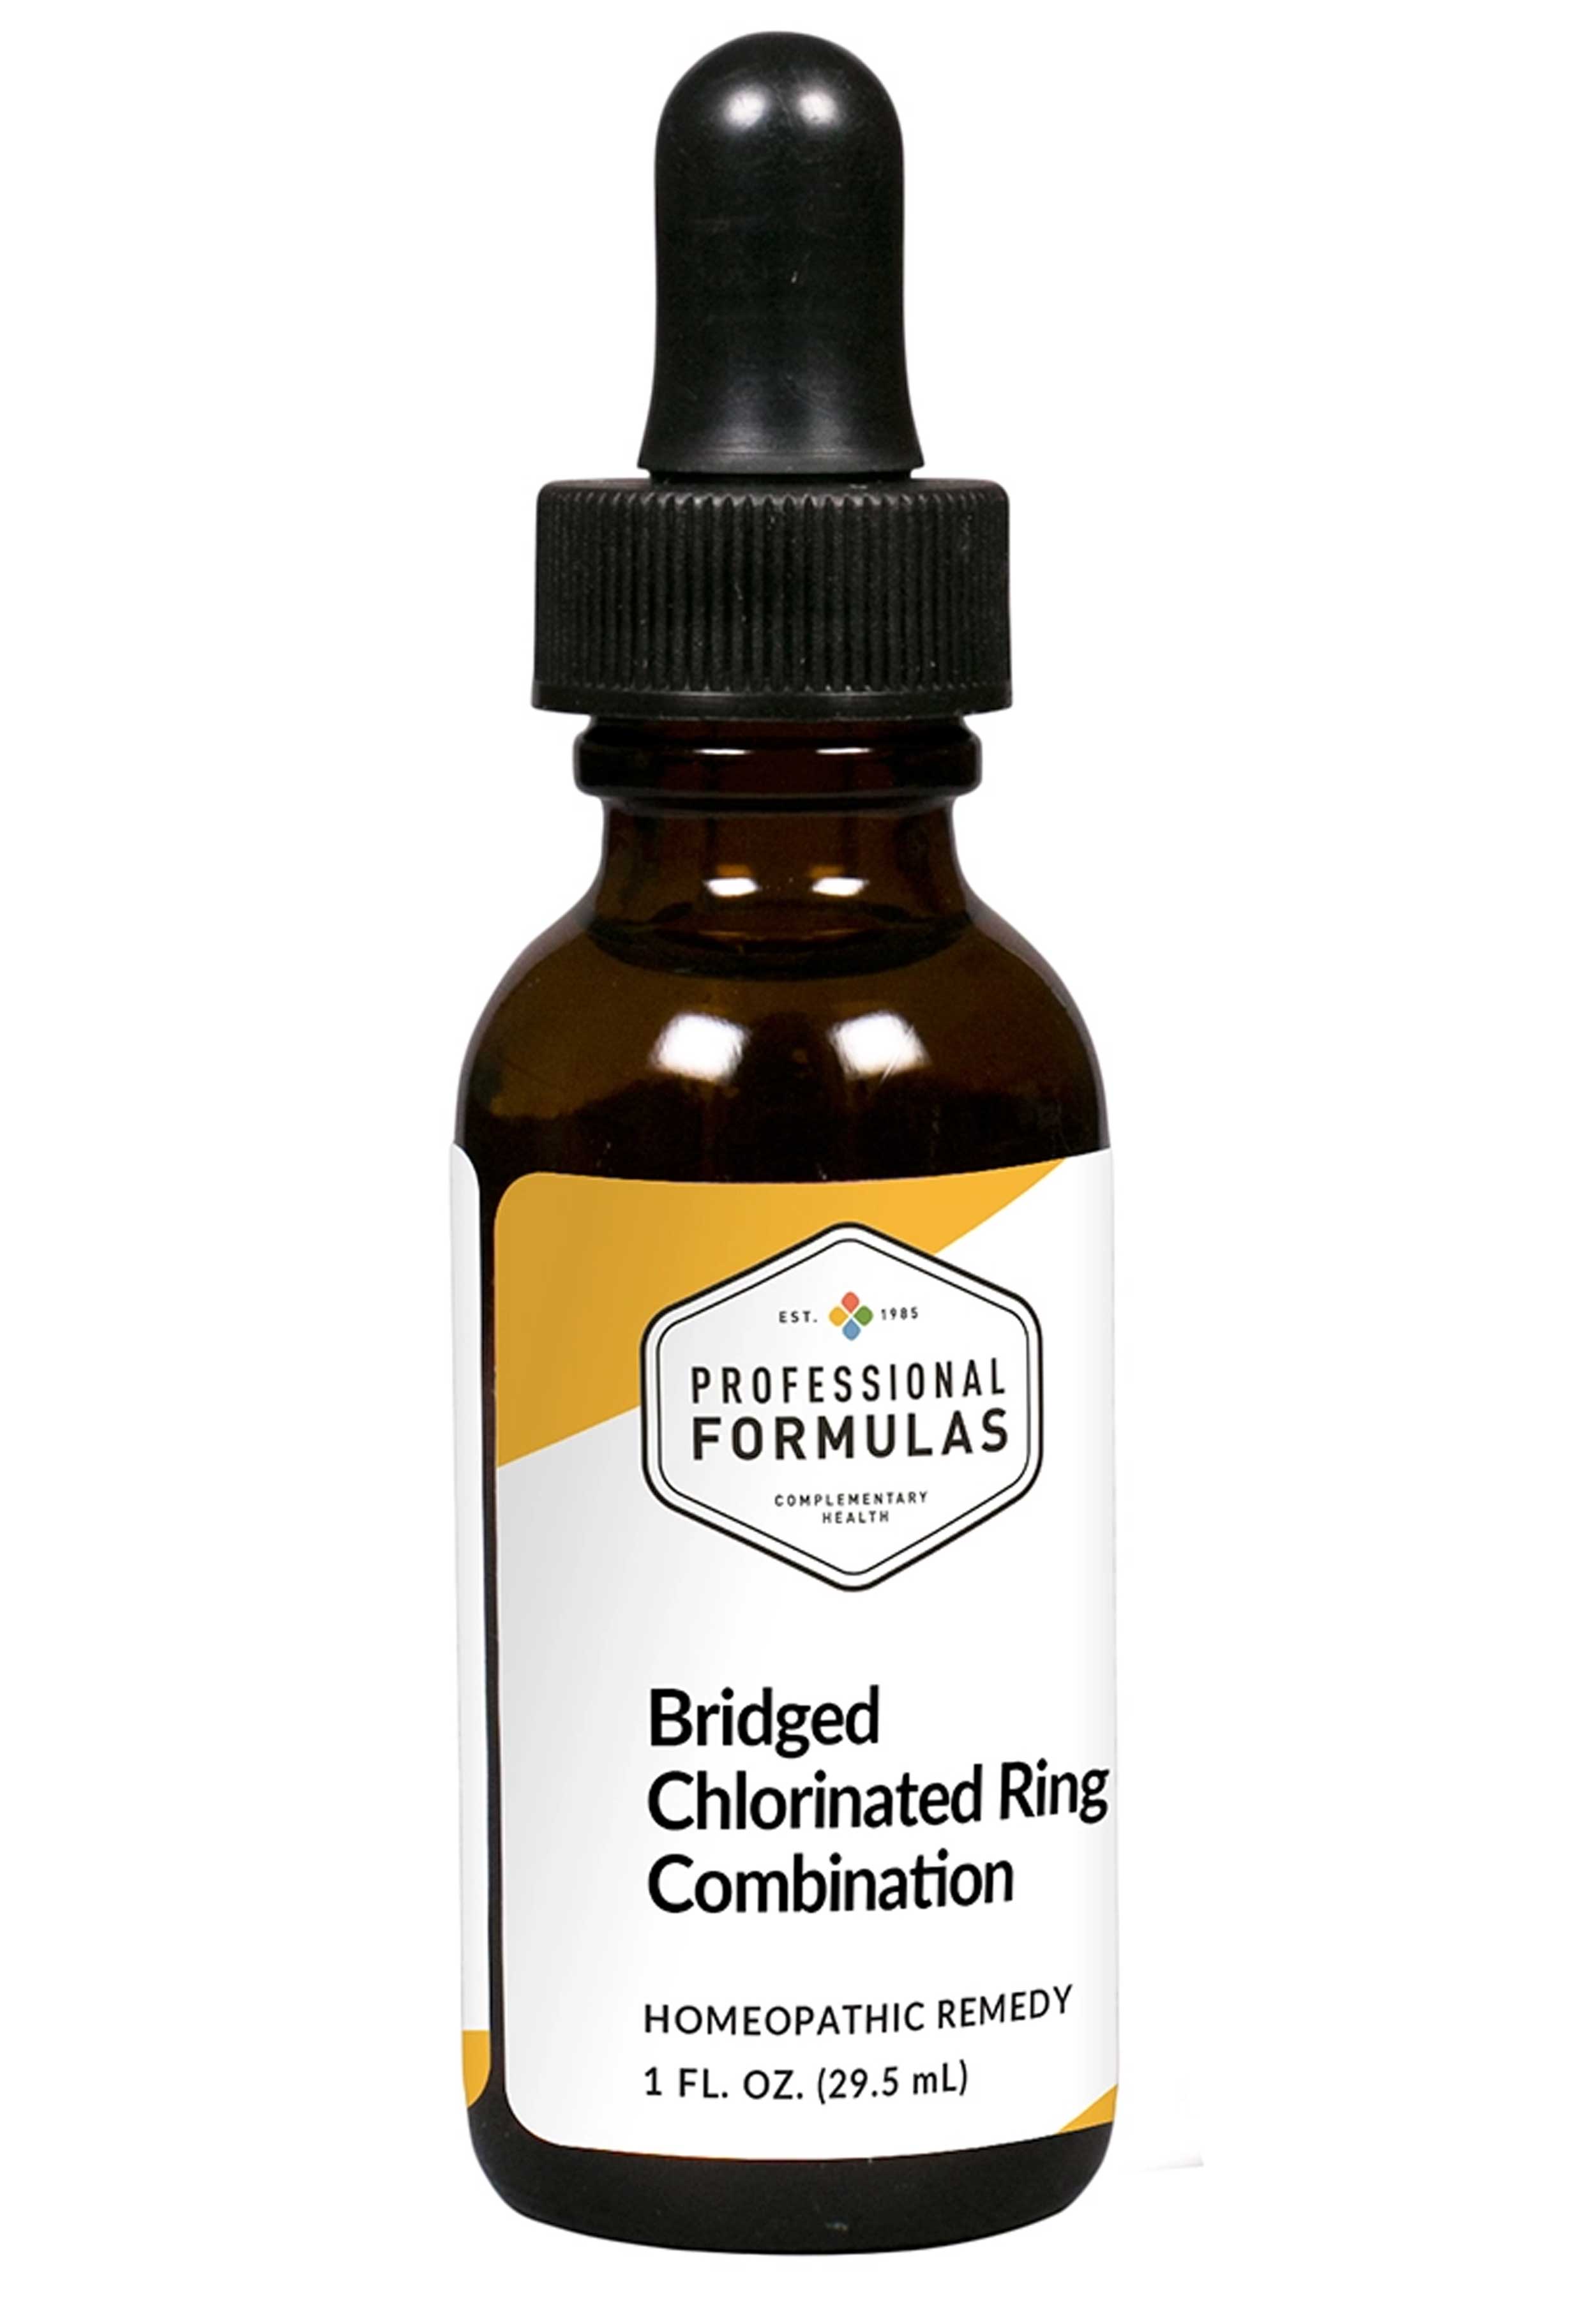 Professional Formulas Bridged Chlorinated Ring Combination